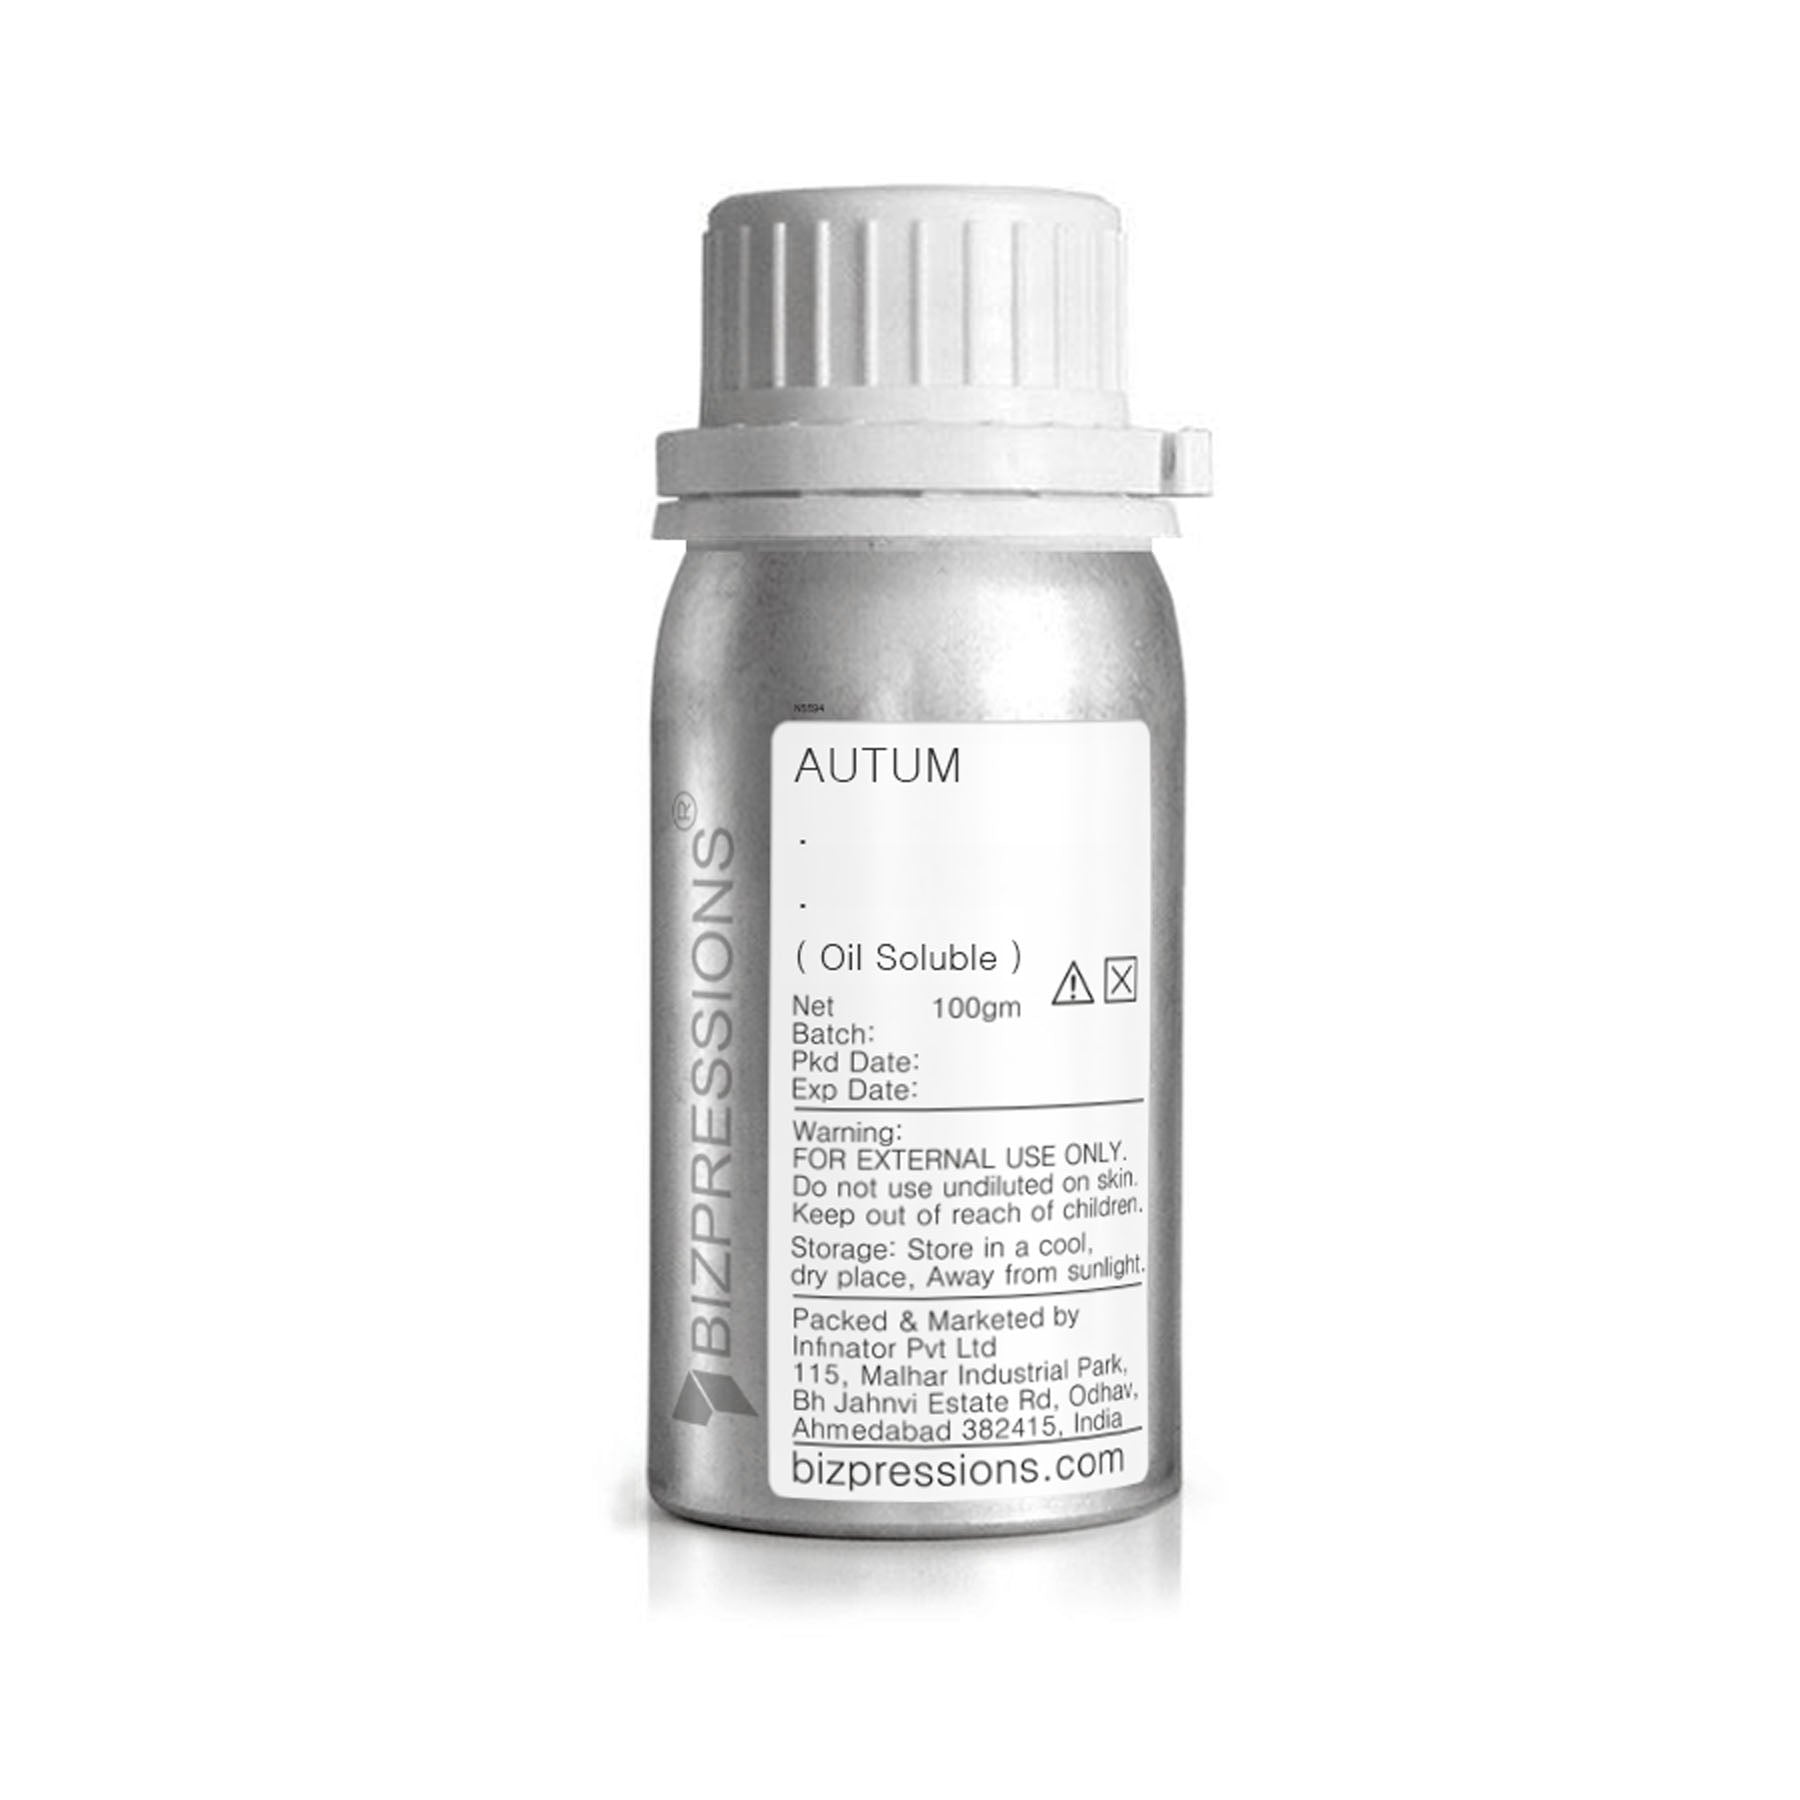 AUTUM - Fragrance ( Oil Soluble ) - 100 gm